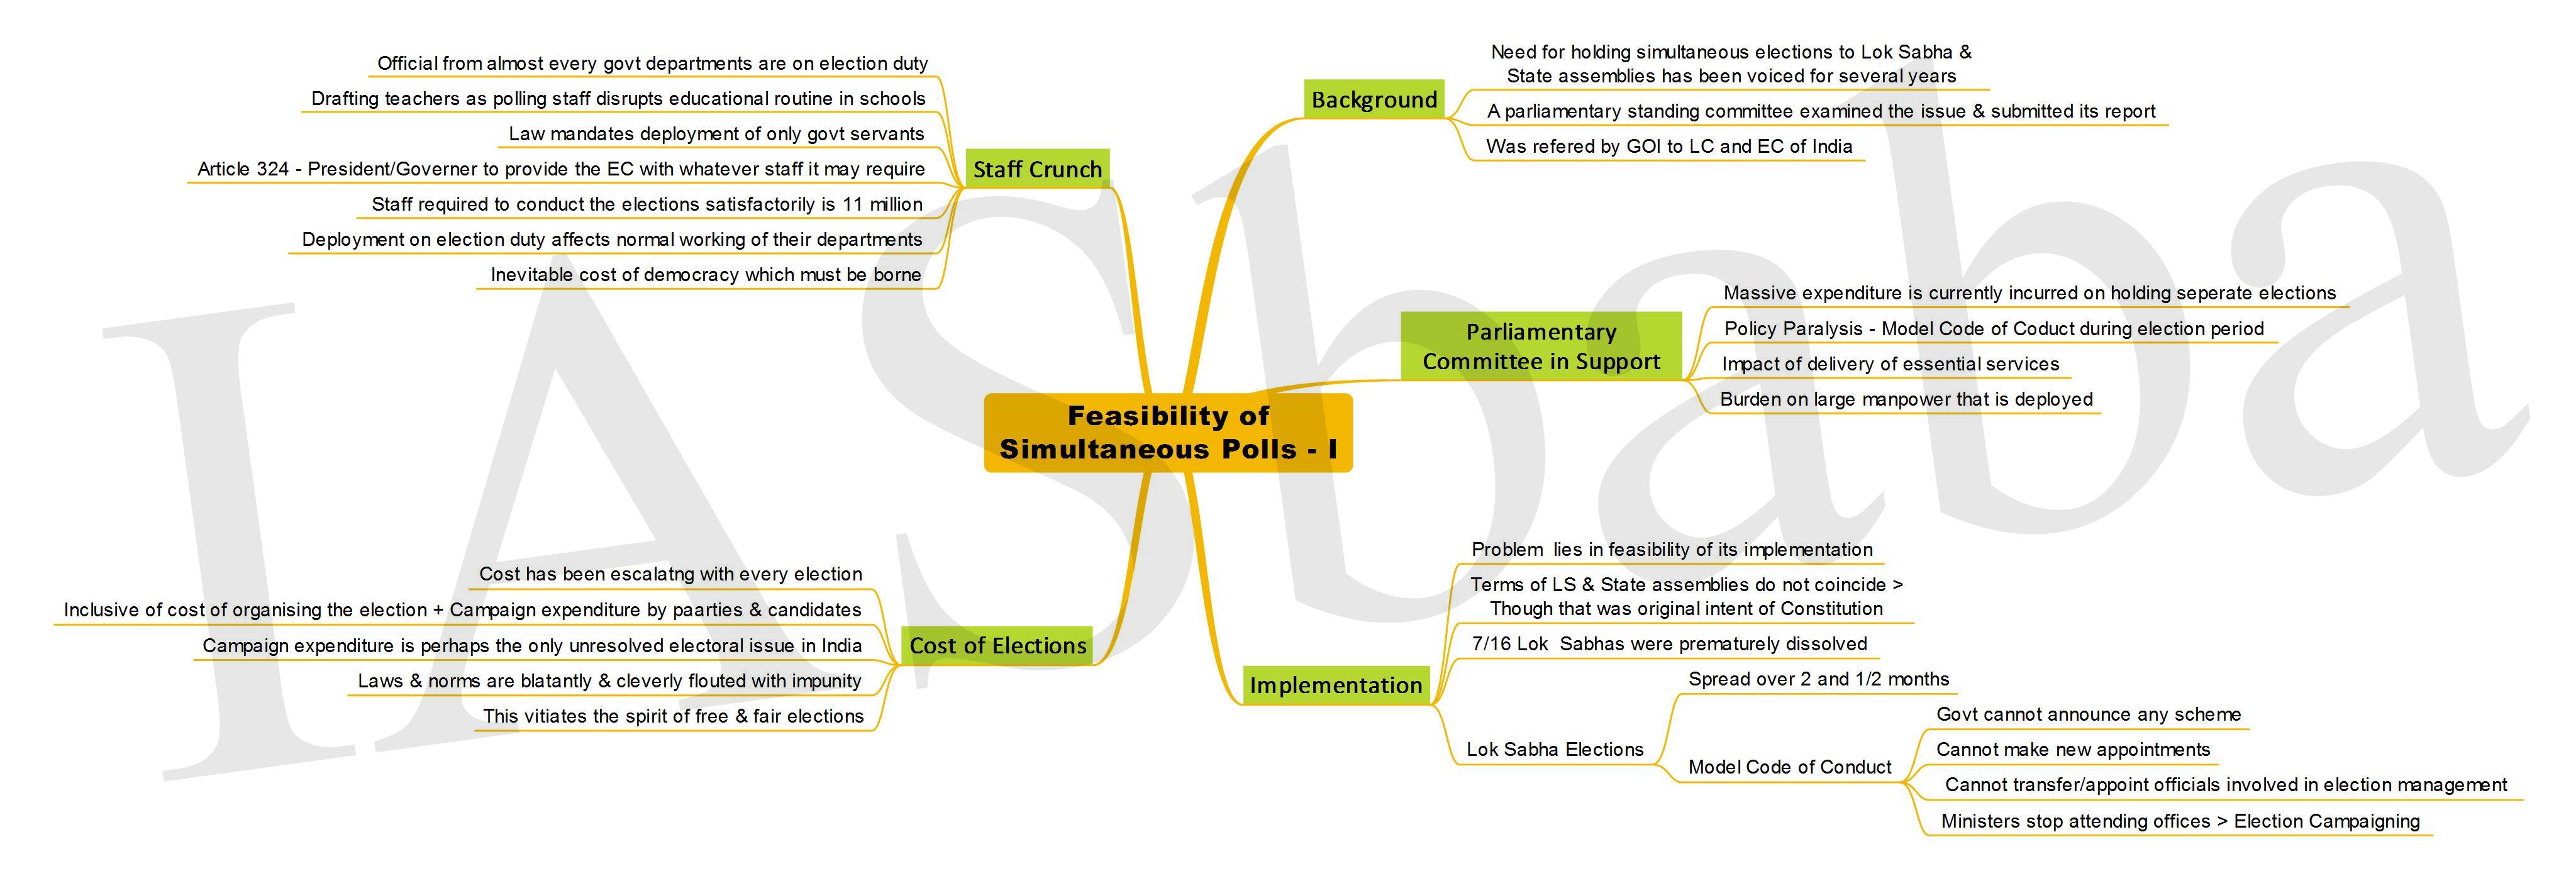 Feasibility of Simultaneous Polls - I IASbaba